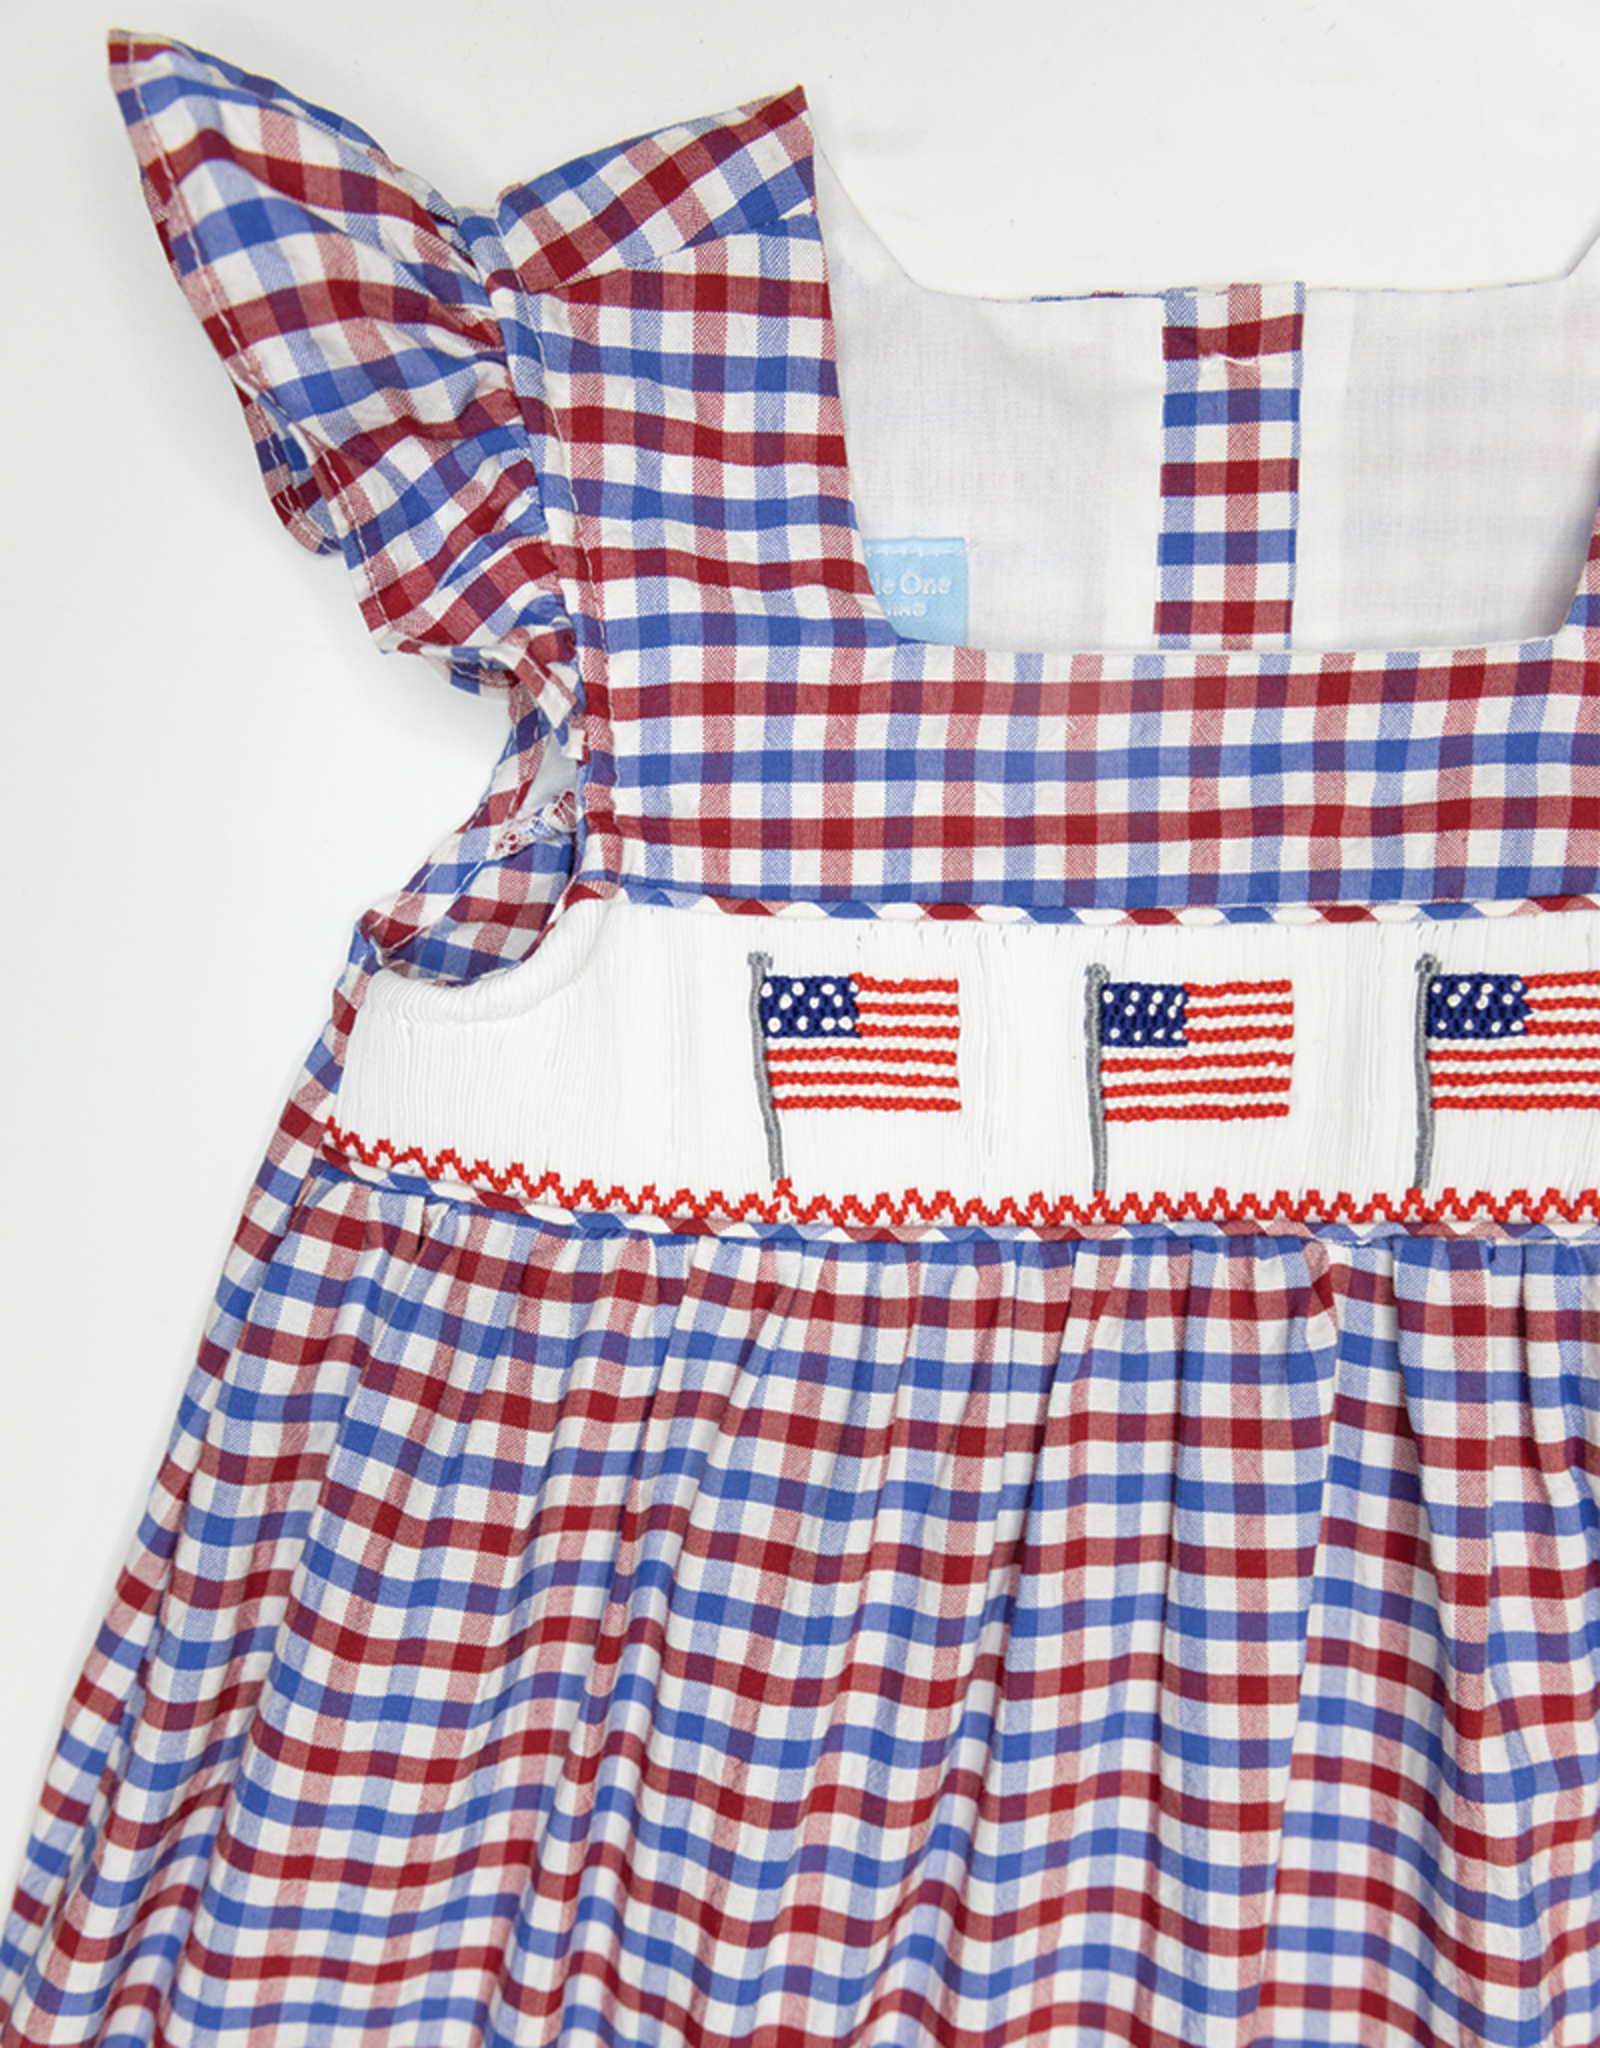 Charming Little One GQ1328 Patriotic Grace Dress